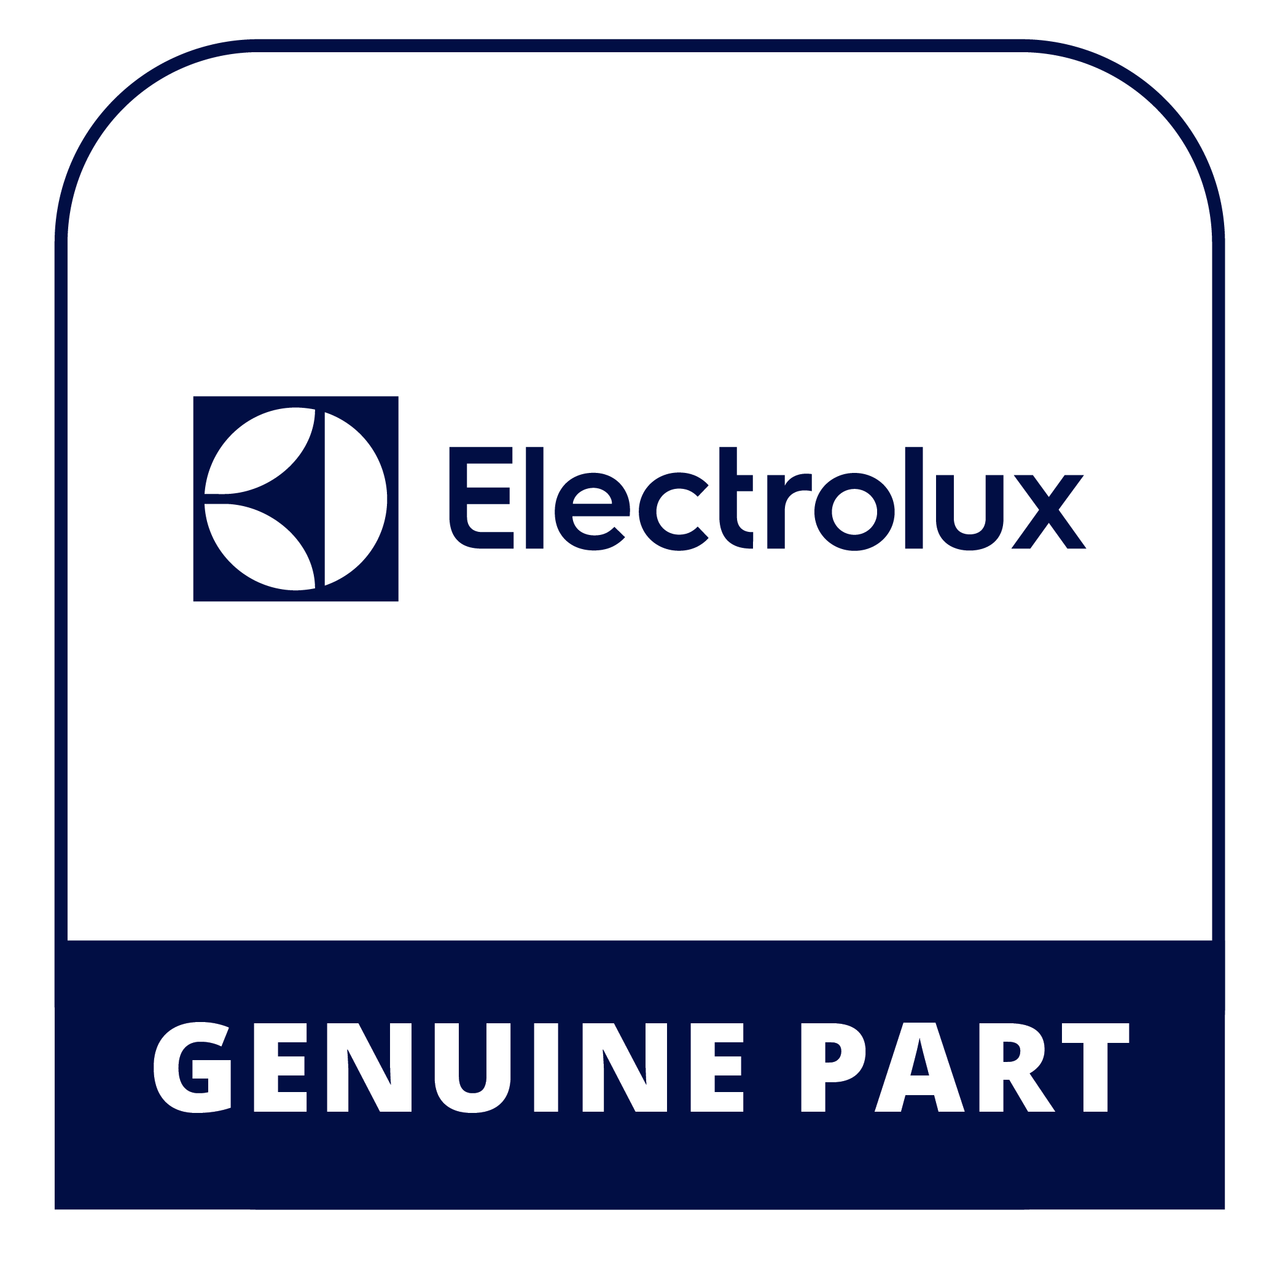 Frigidaire - Electrolux 5303918549 - Evap Motor Service - Genuine Electrolux Part